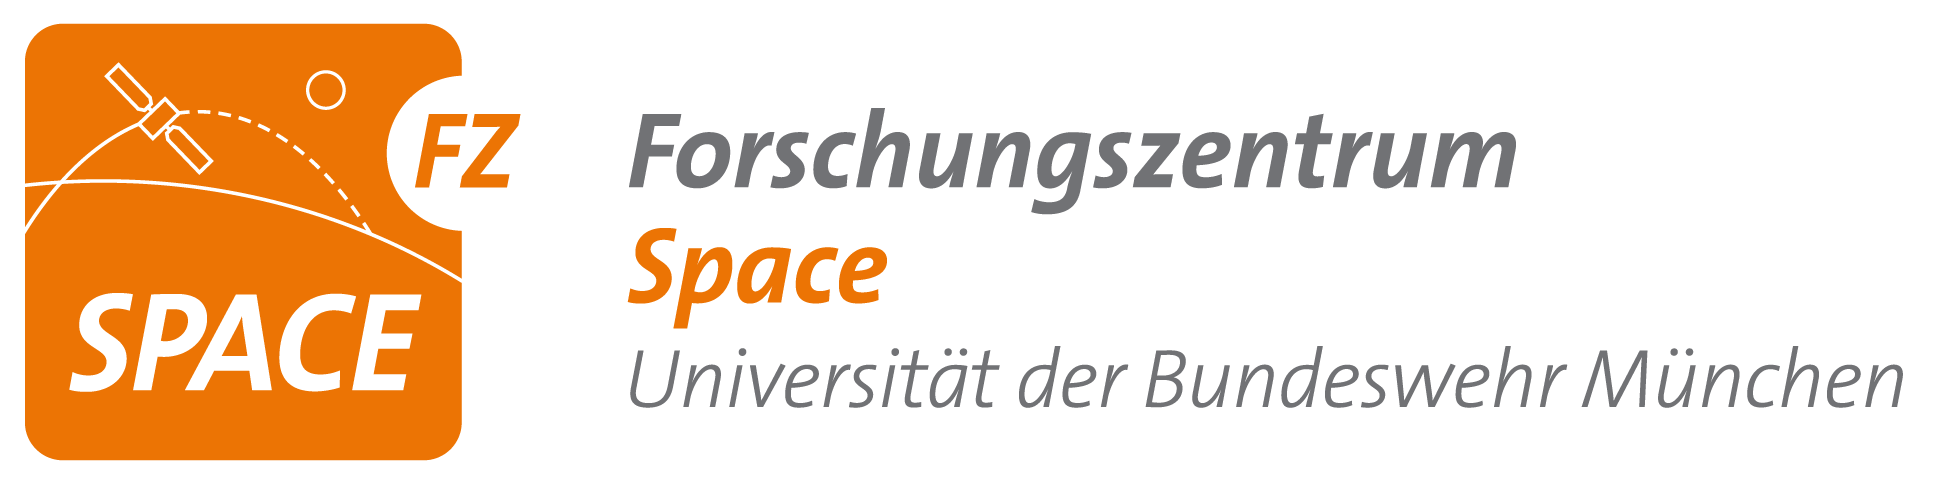 Logo_FZ-Space_de_300dpi.png